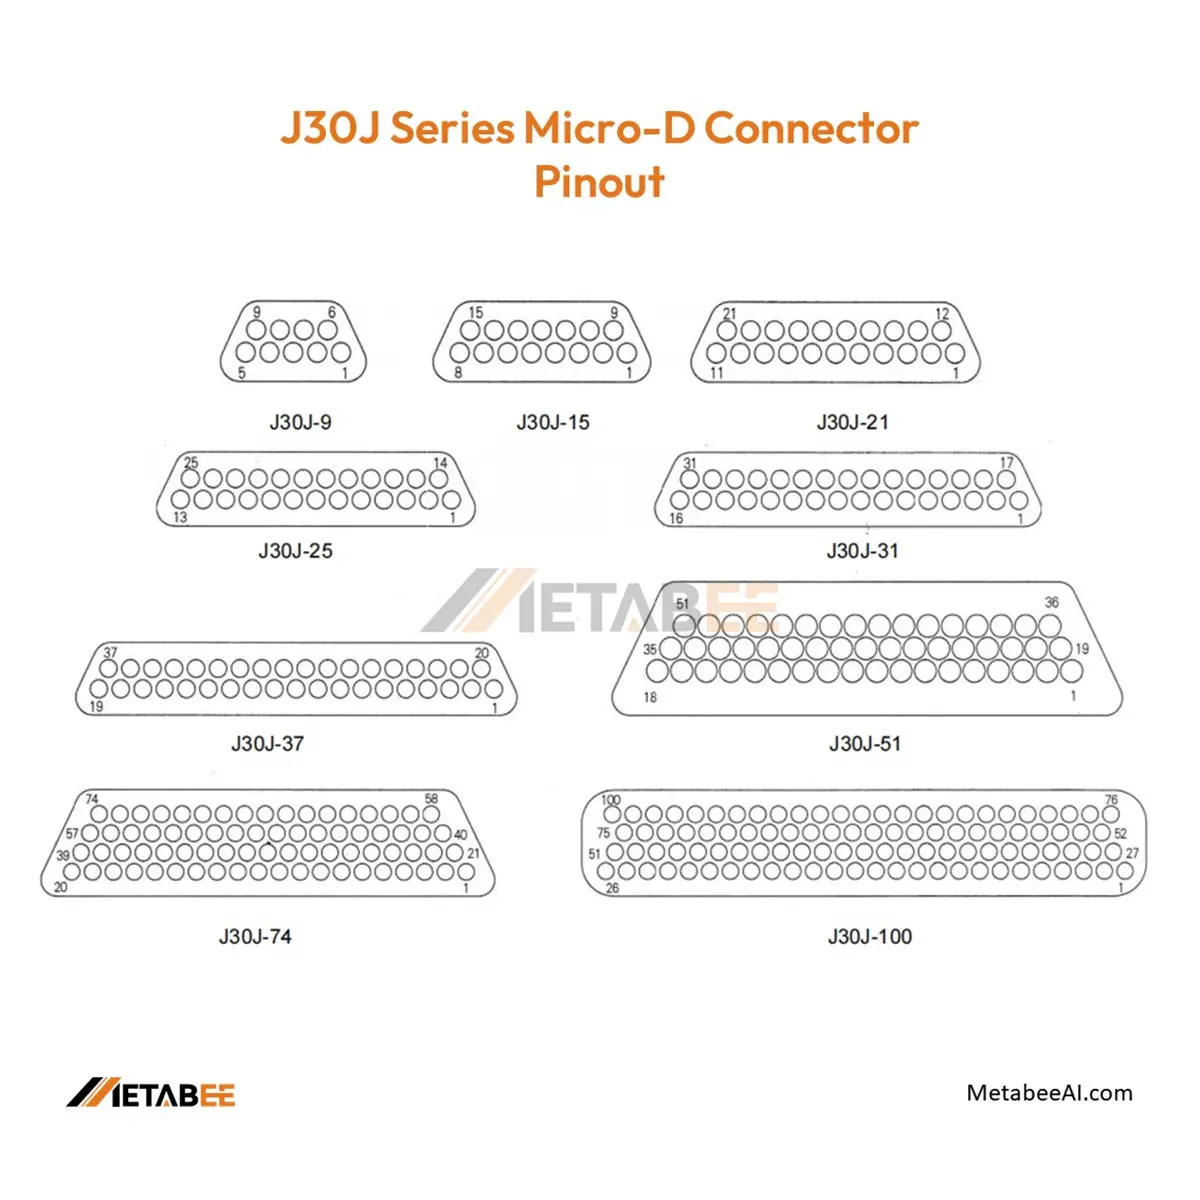 J30J Micro-D Connector Pinout